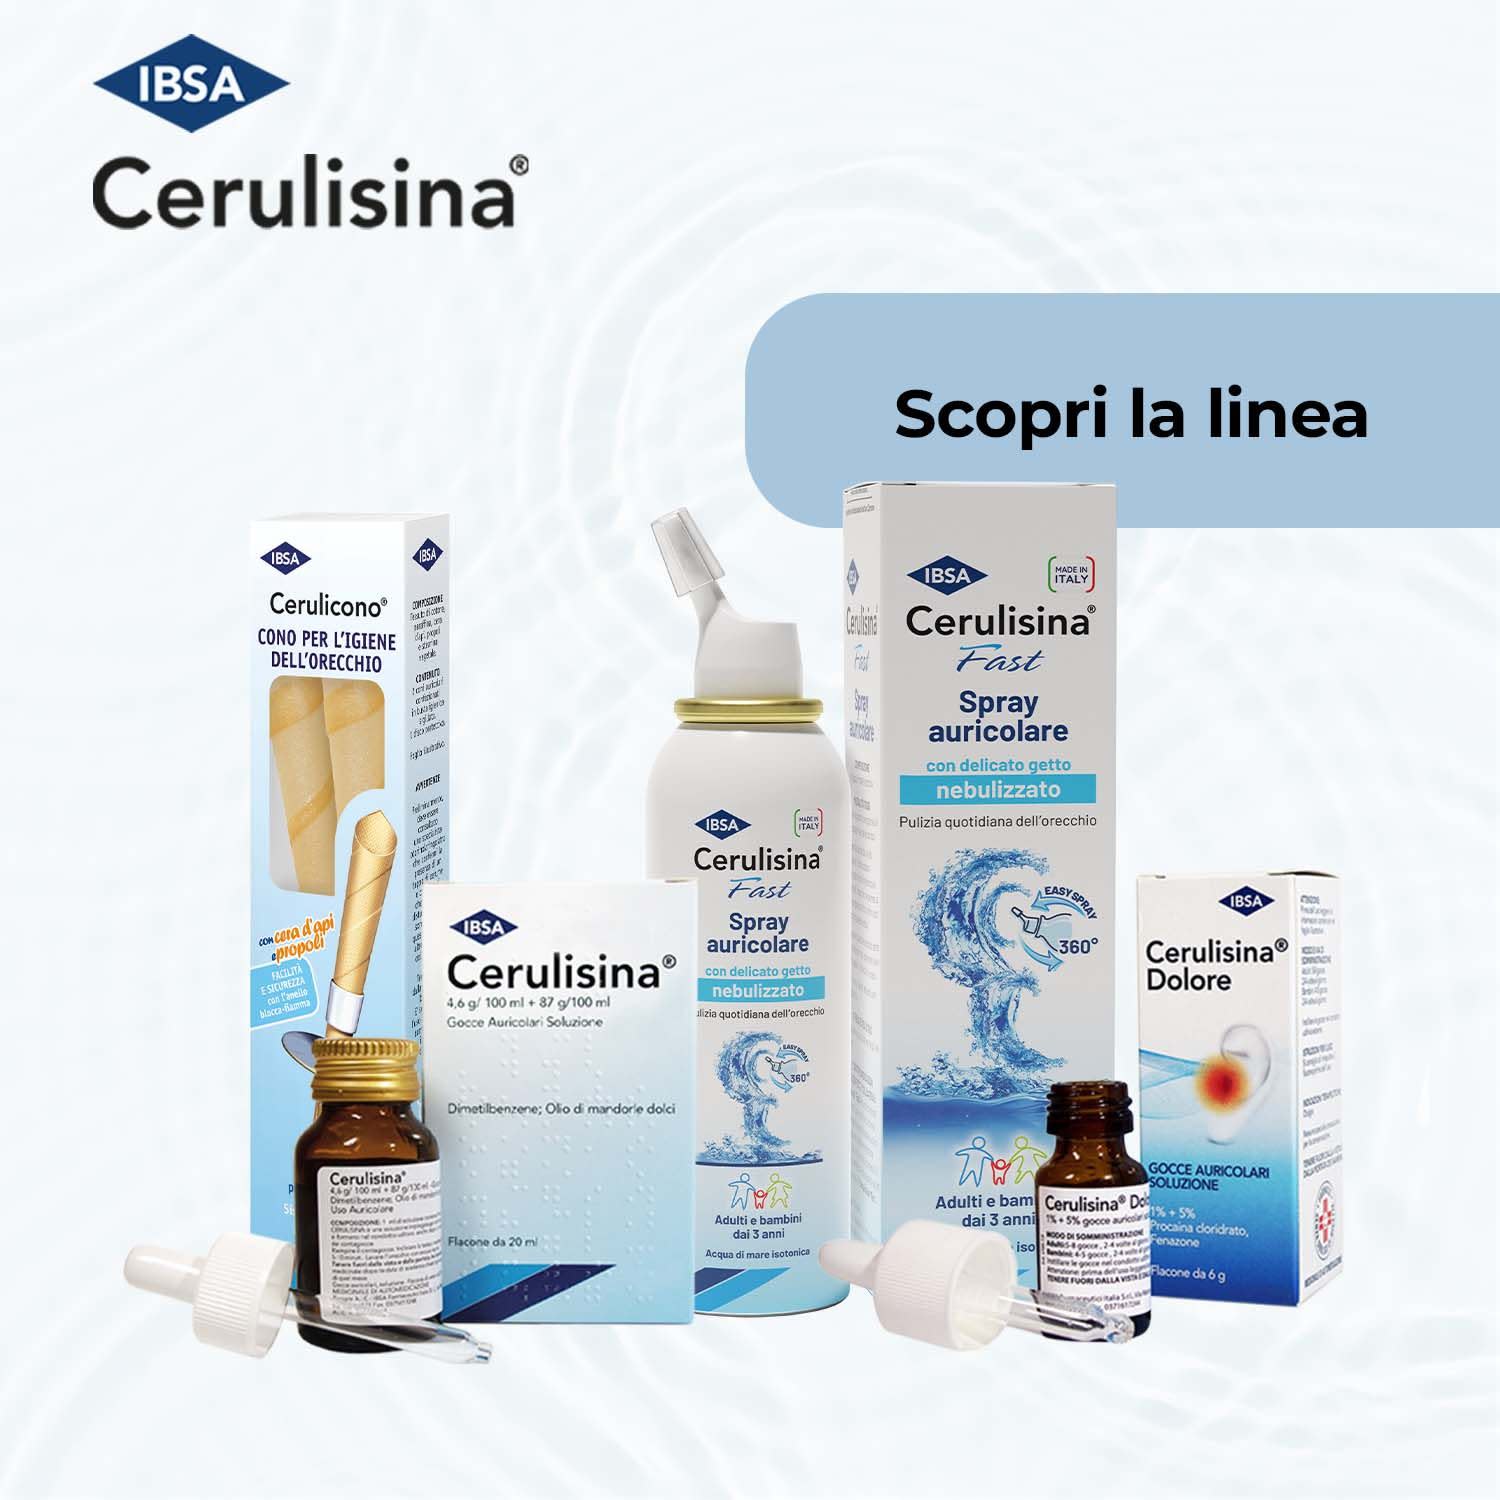 020157018 - Cerulisina Gocce Auricolari Soluzione 20ml - 1290907_5.jpg